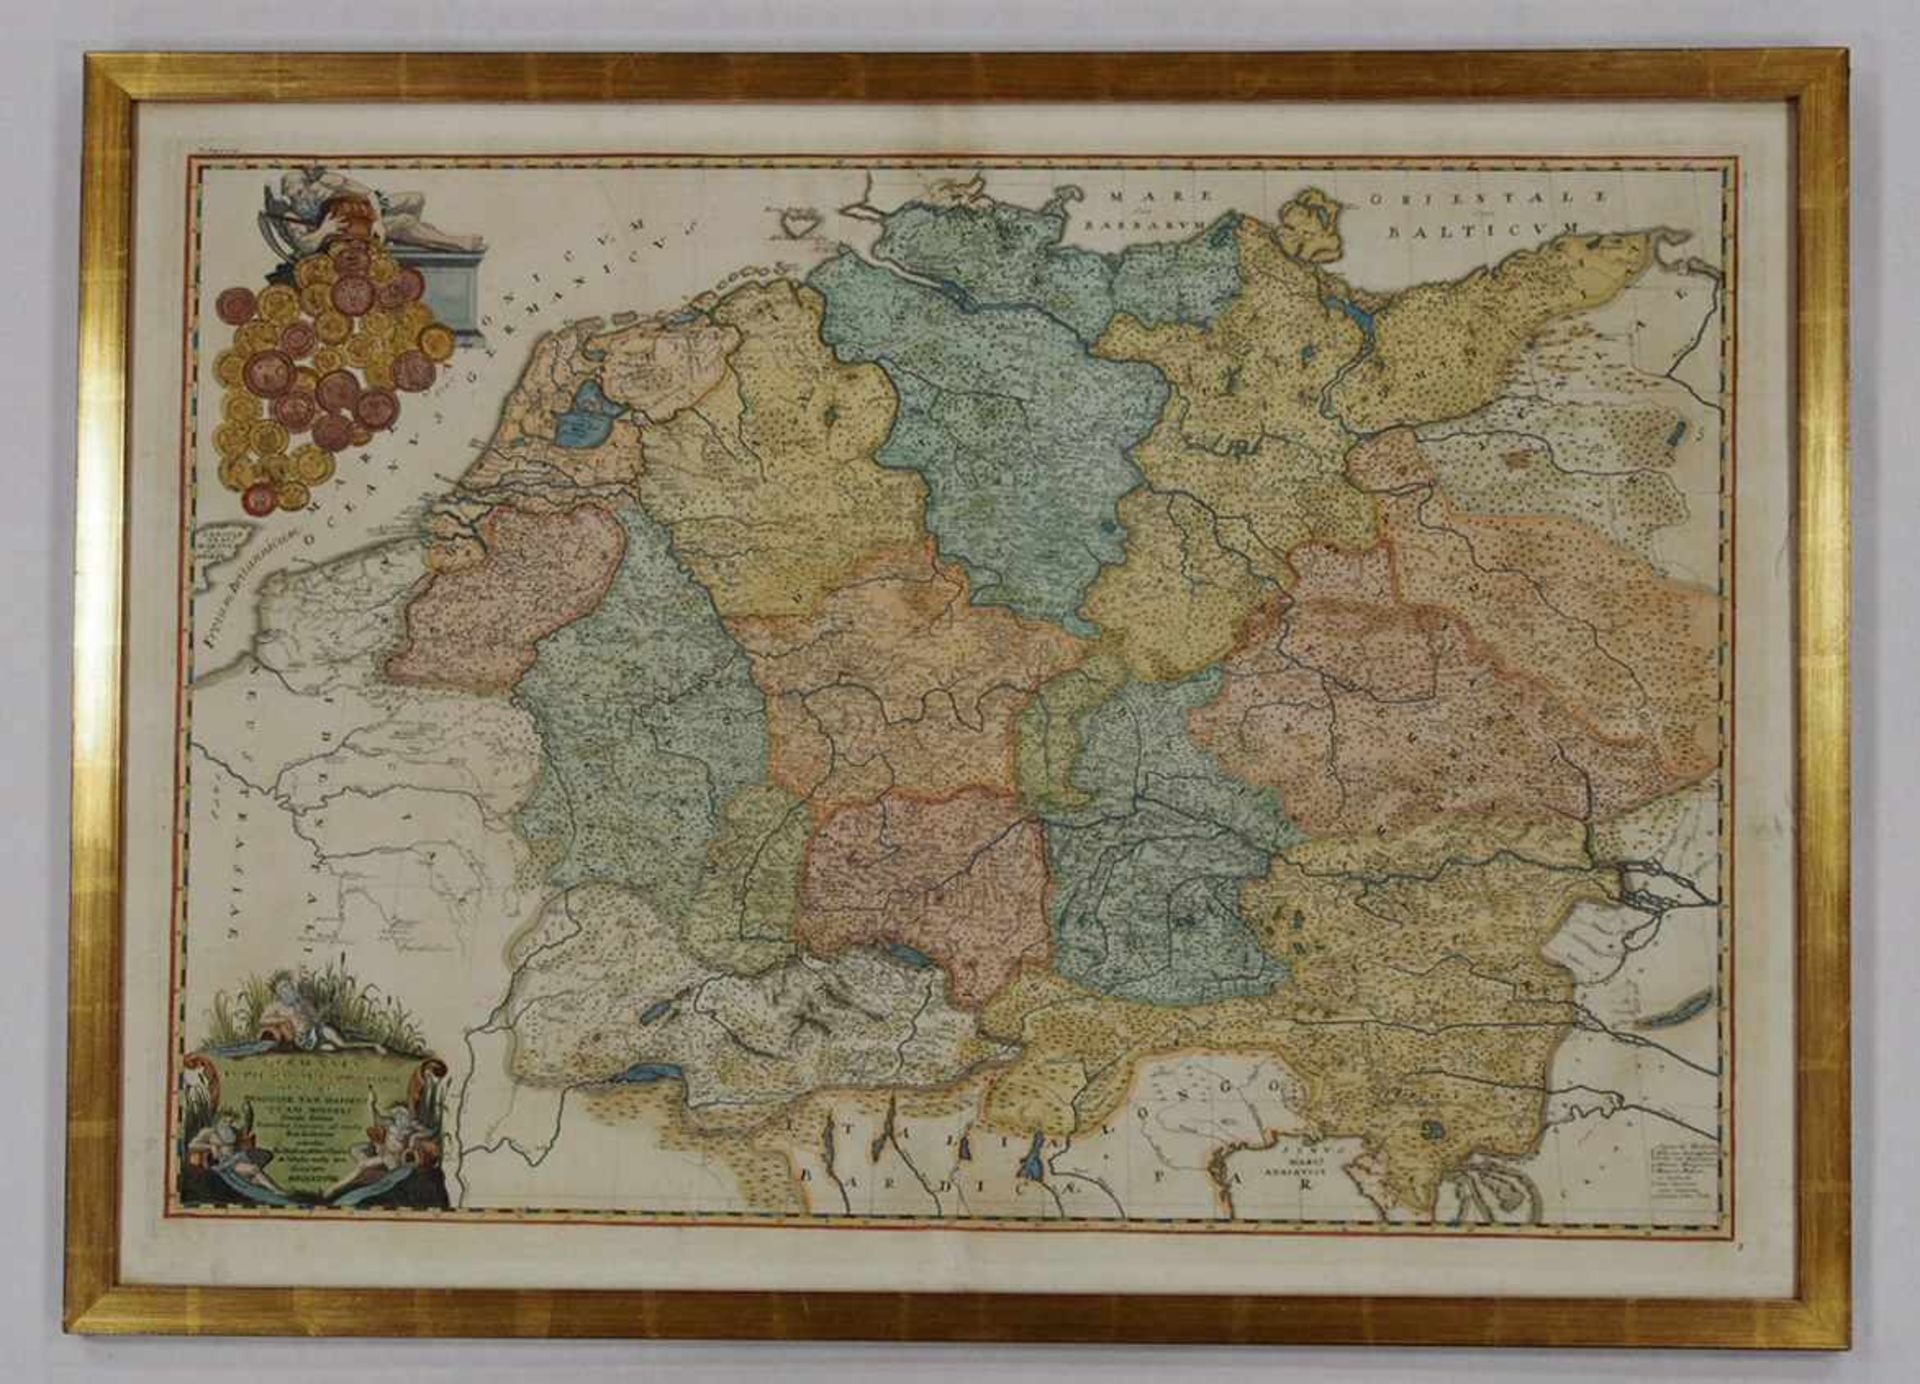 Germania in priscas sua provincias ducatusKupferstich, koloriert, datiert 1729, Küsten-